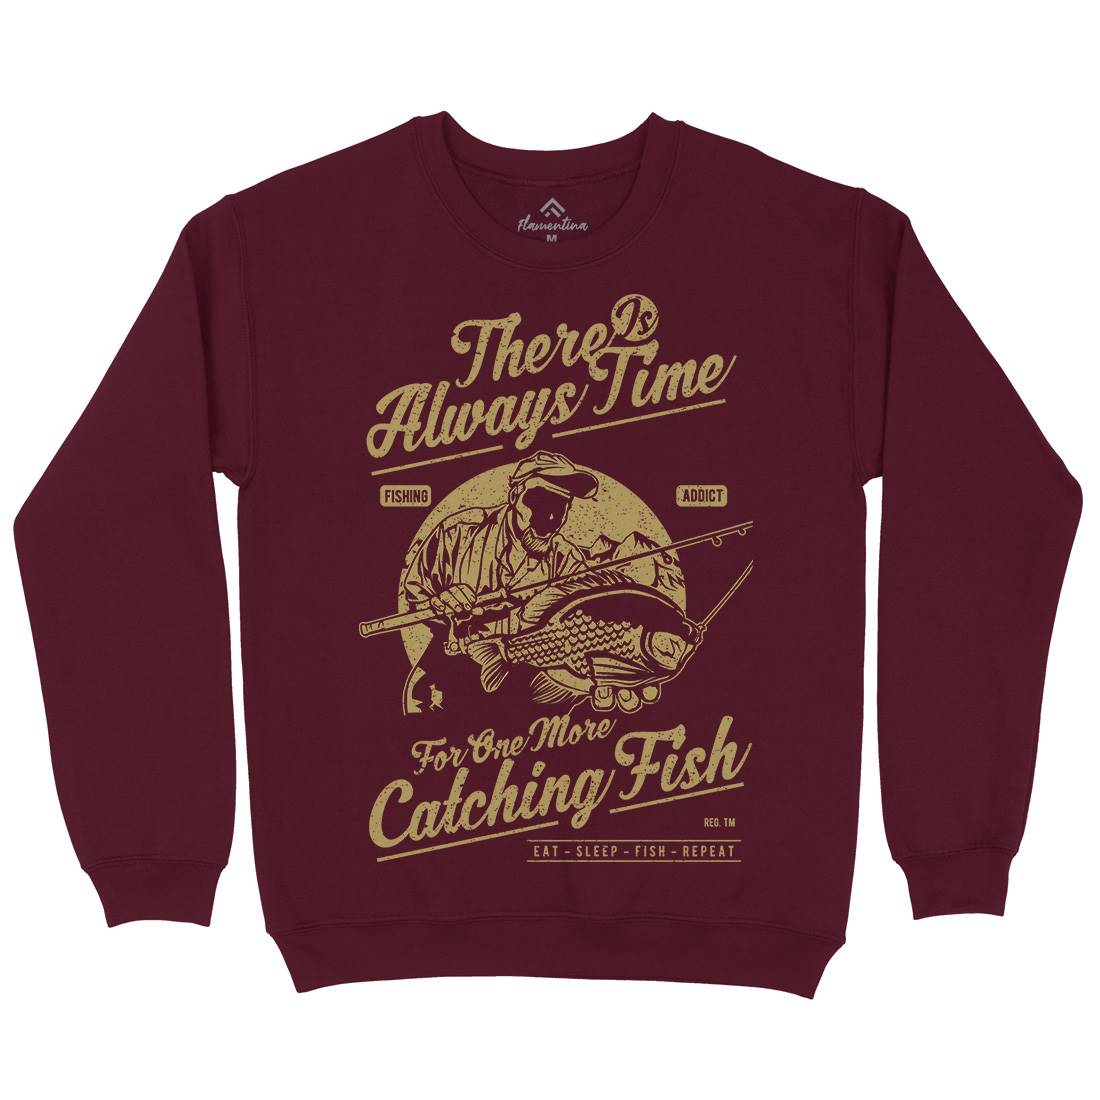 One More Catching Mens Crew Neck Sweatshirt Fishing A731